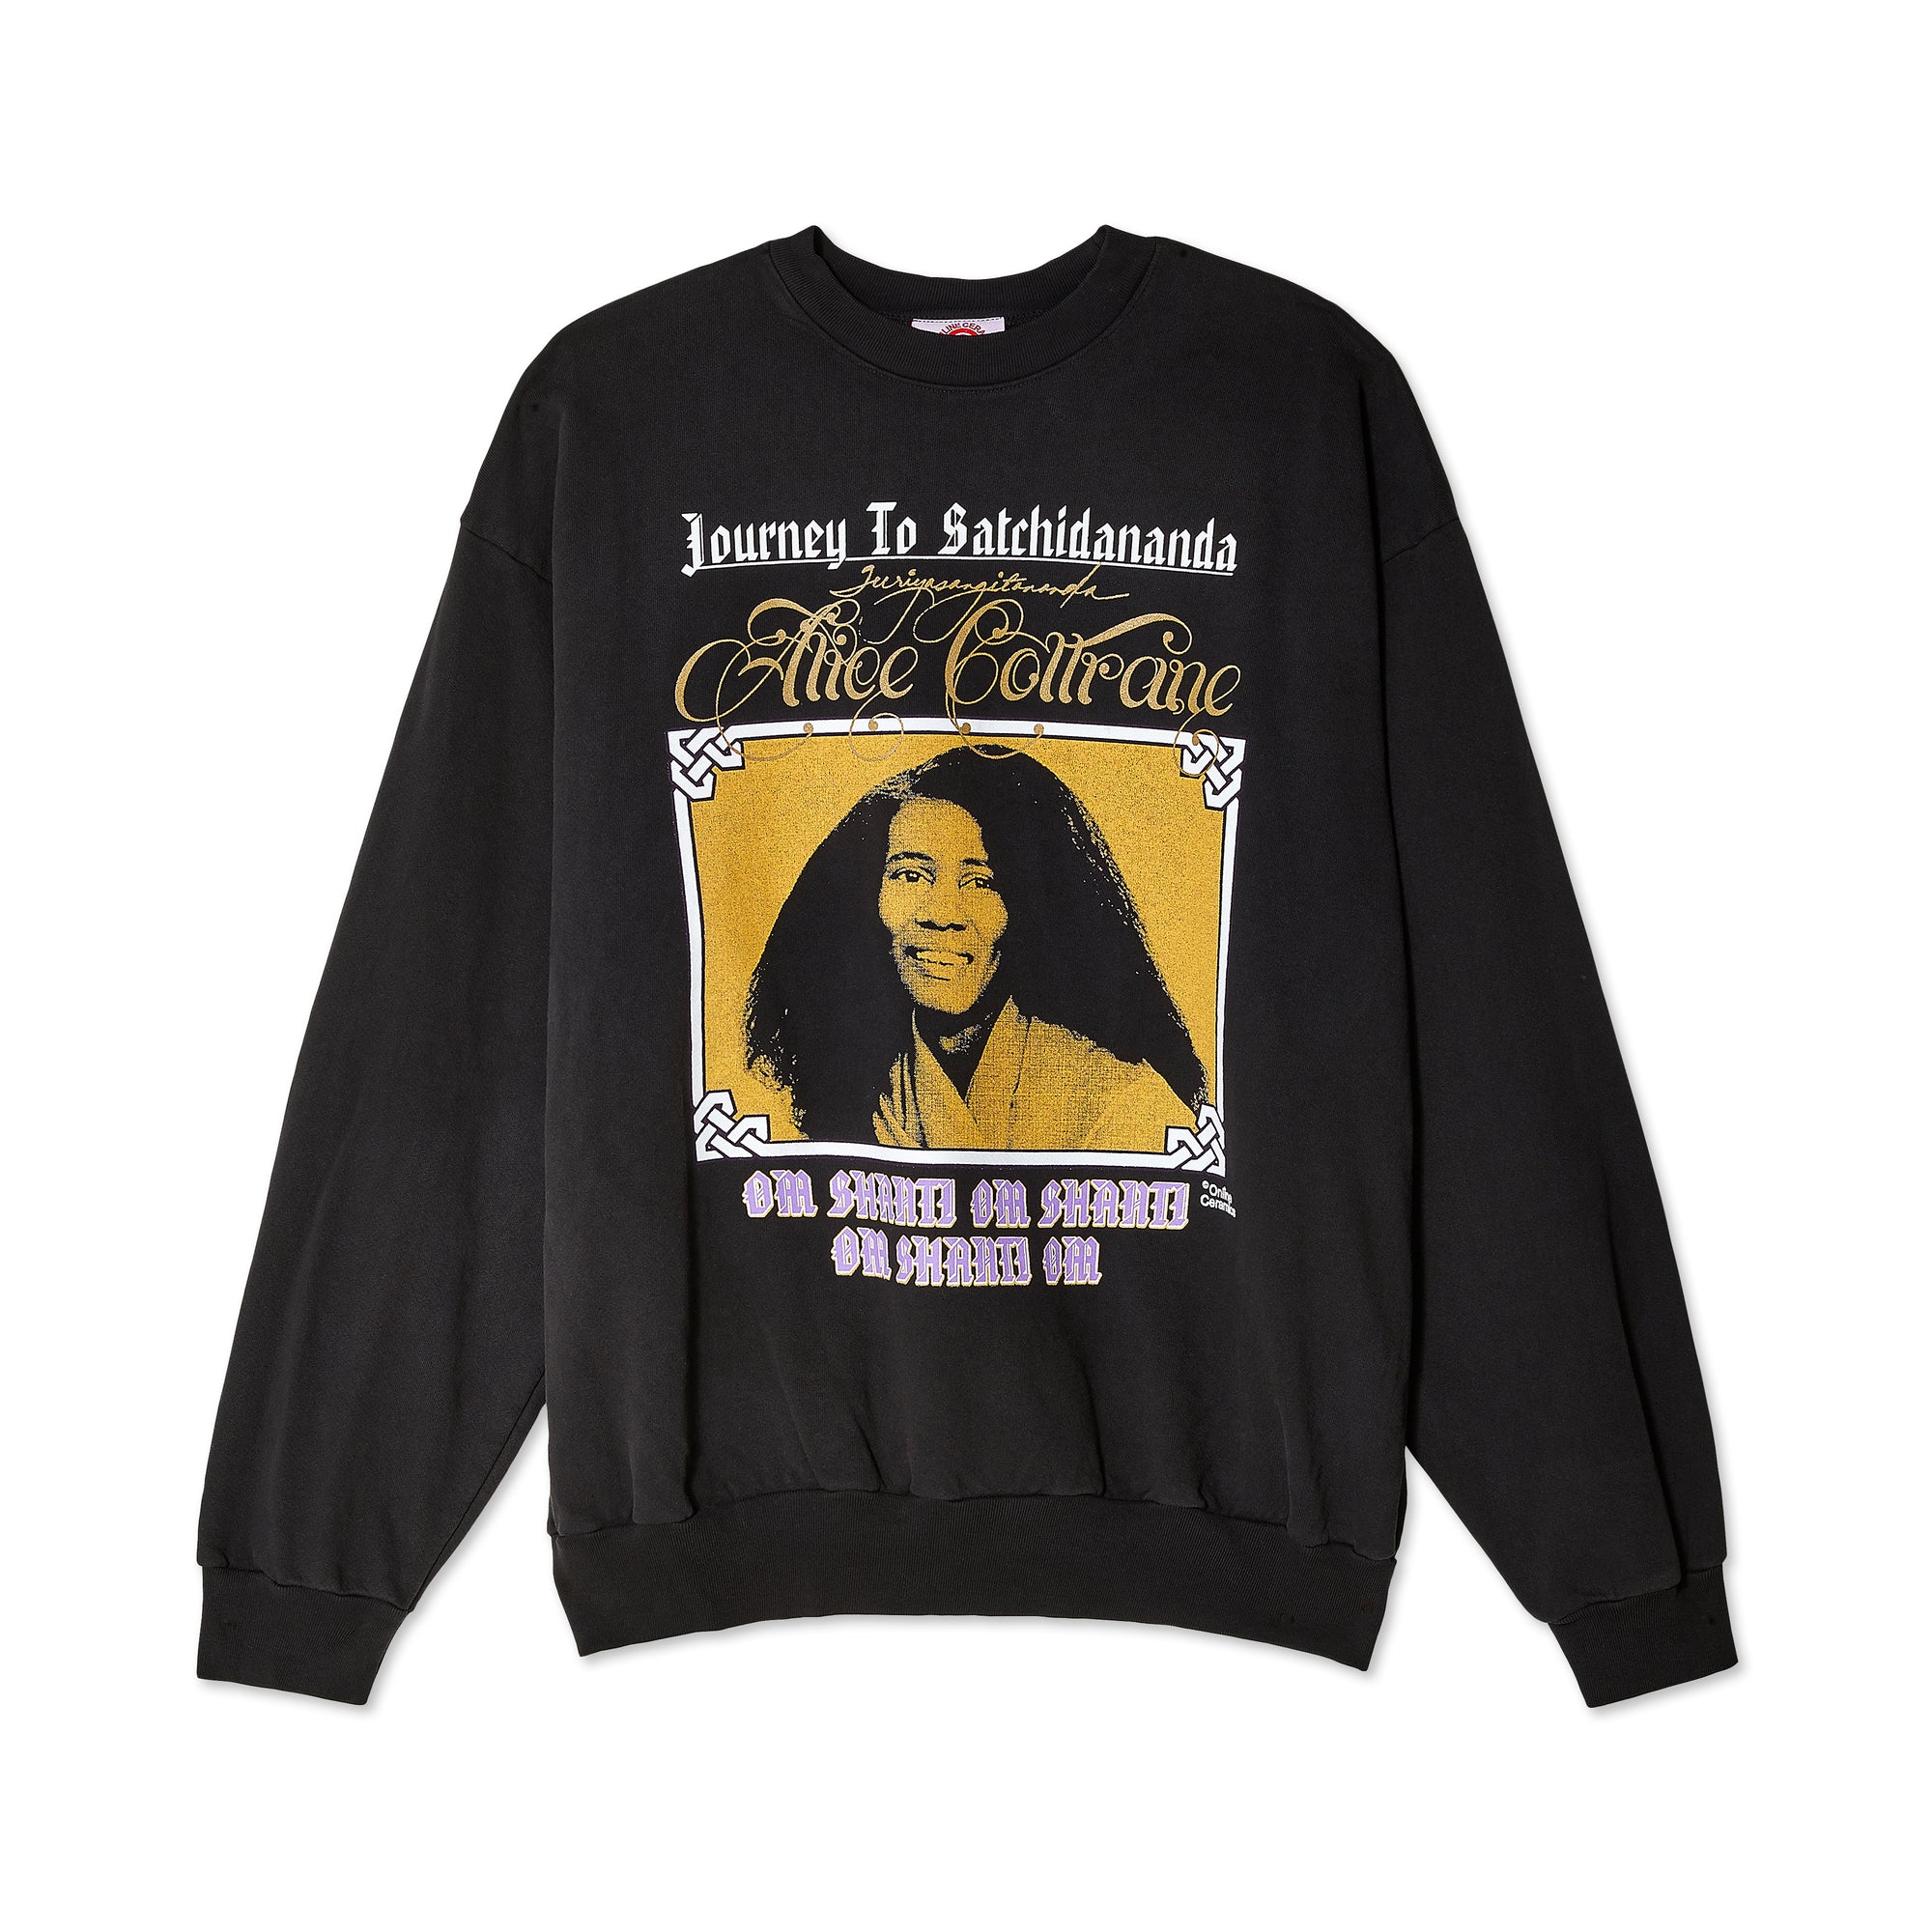 Online Ceramics - Alice Coltrane ’Journey to Crew’ Sweatshirt - (Black) view 1